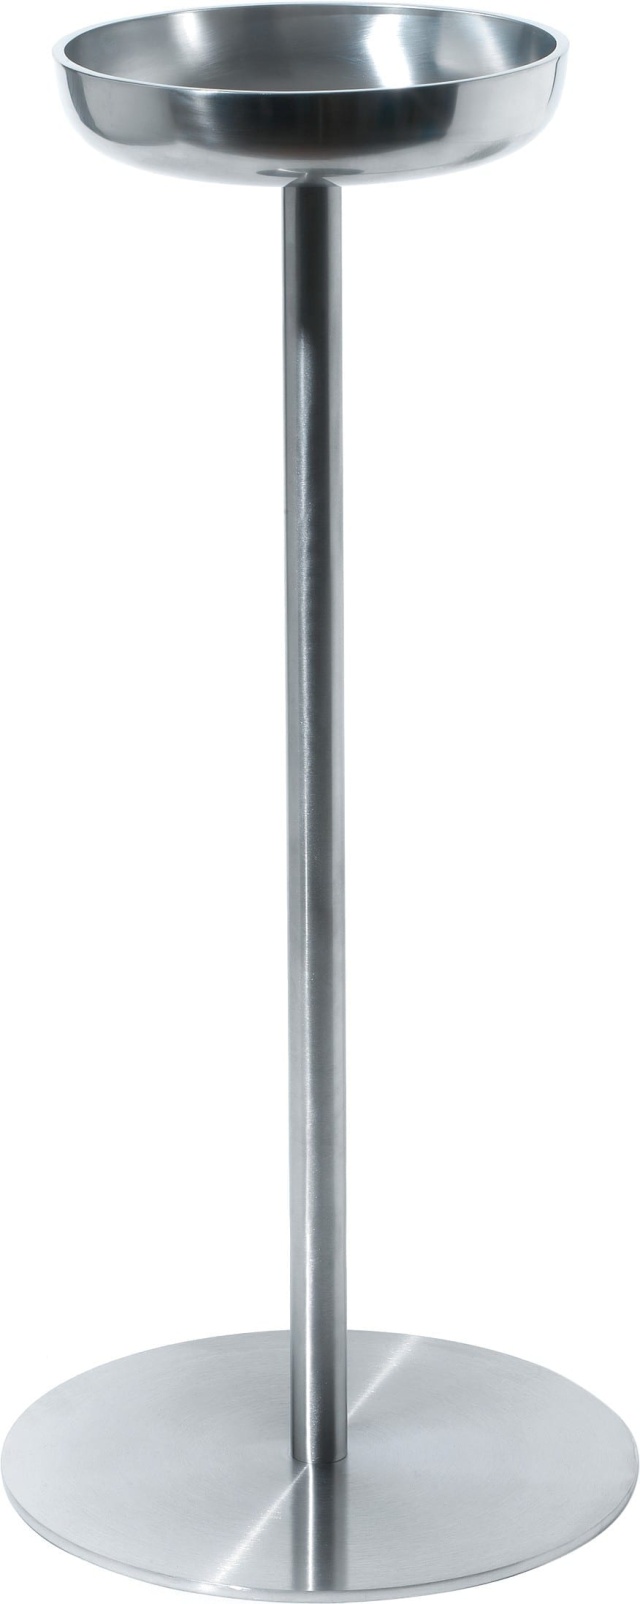 Stand for wine cooler, Diameter 28 cm - Alessi